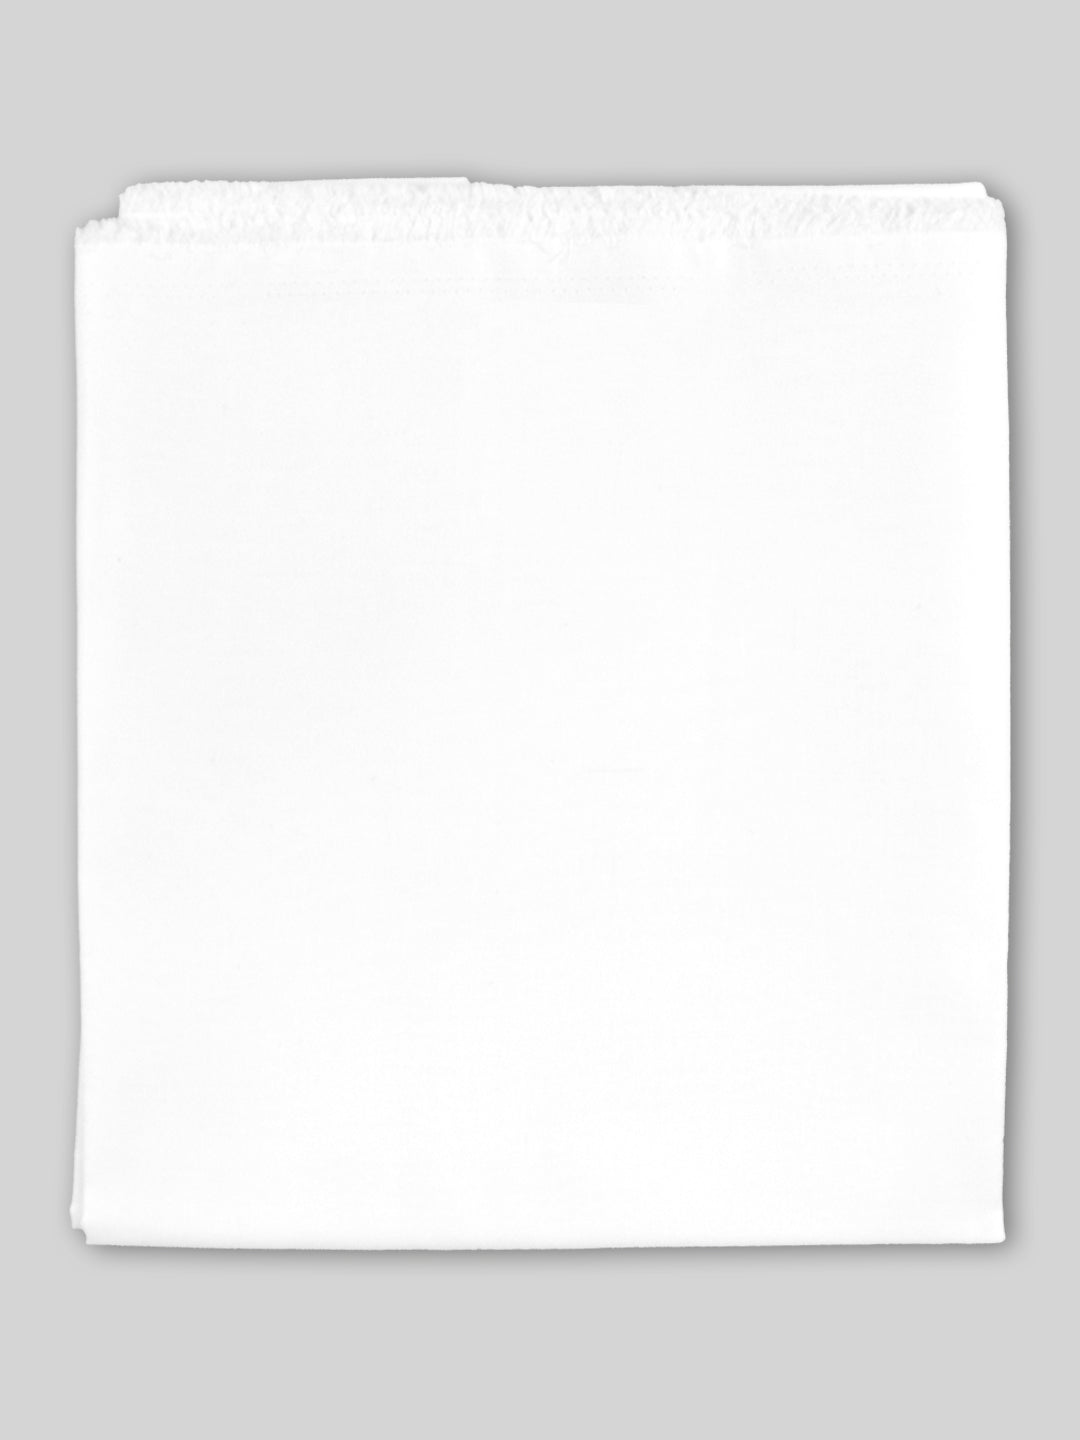 Cotton white shirt Unstitched Fabric-Aircool